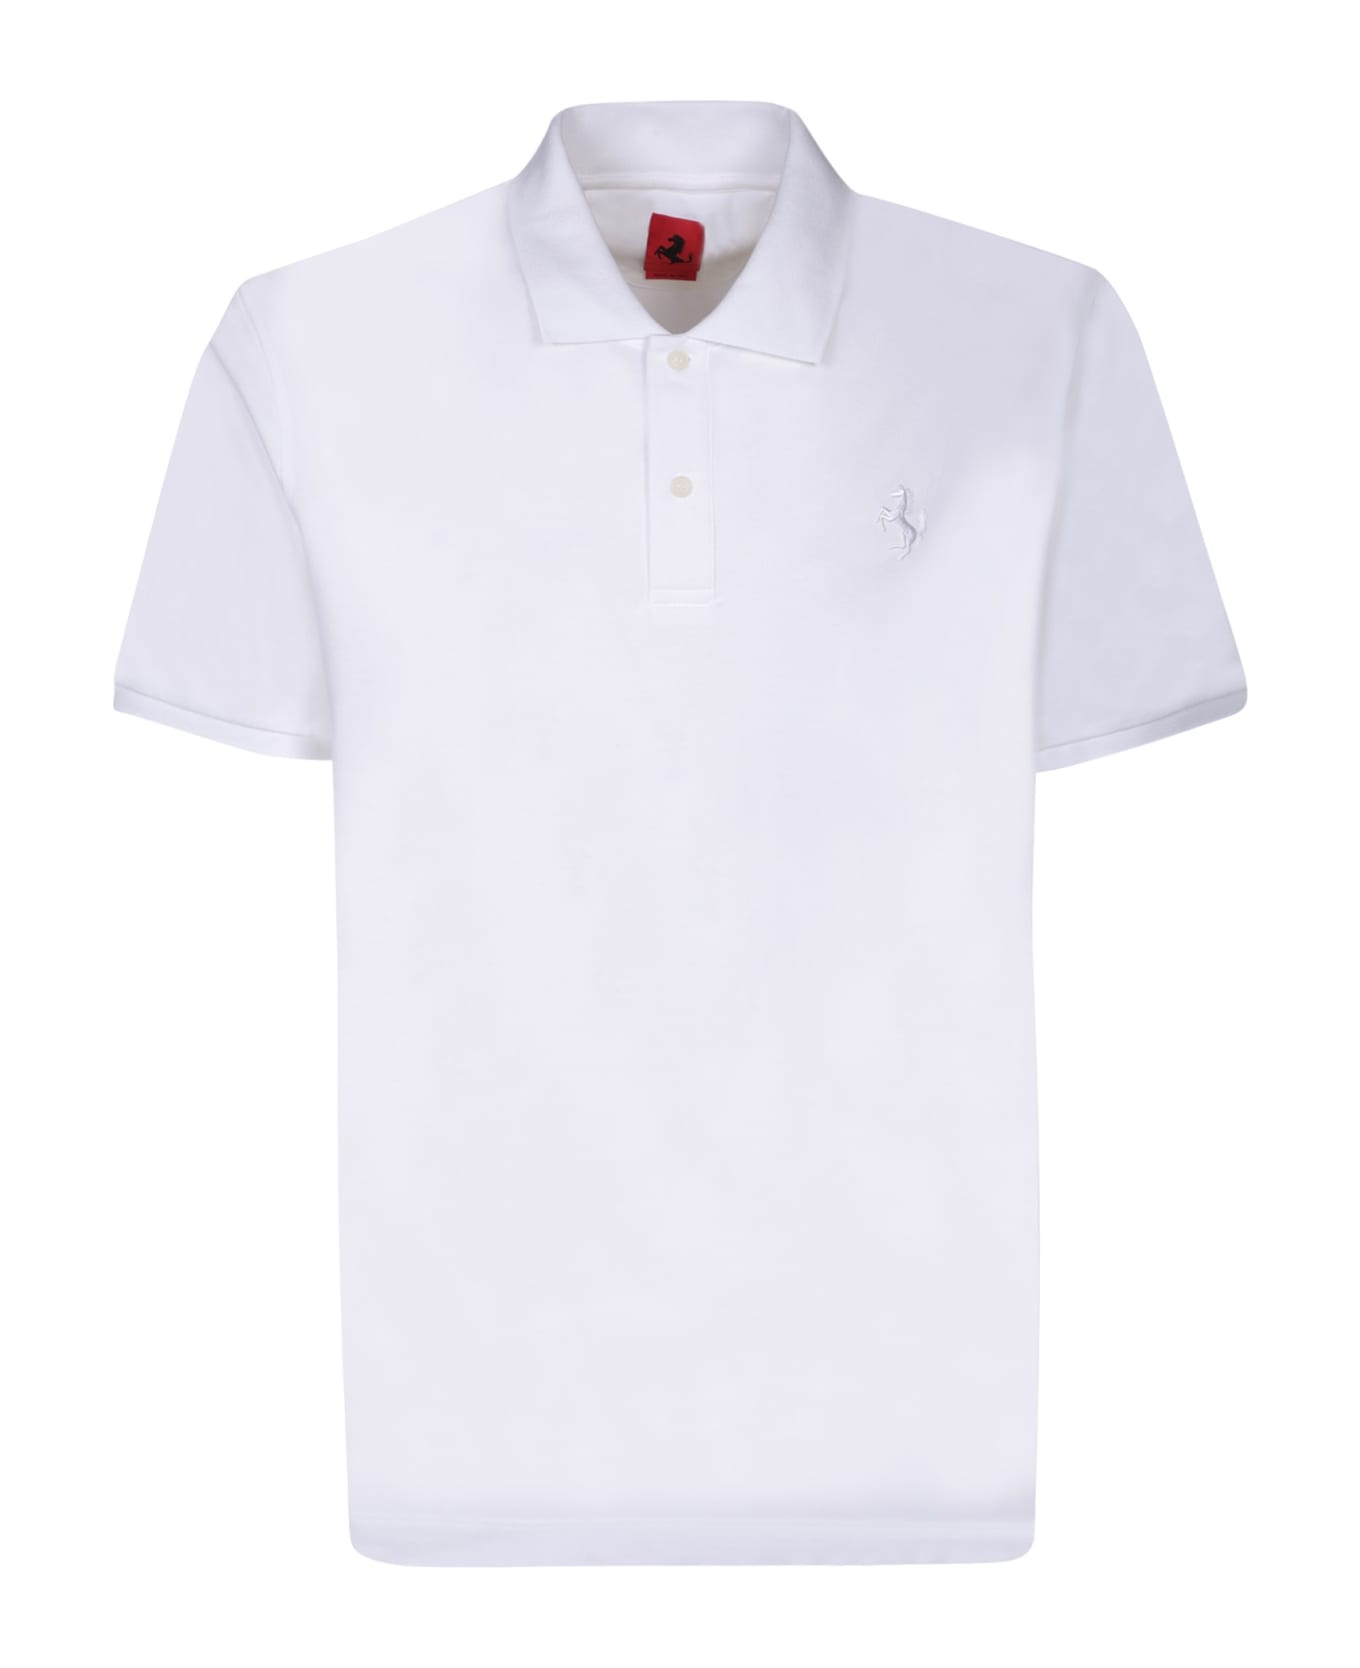 Ferrari Cotton Piquã© White Polo Shirt - White ポロシャツ